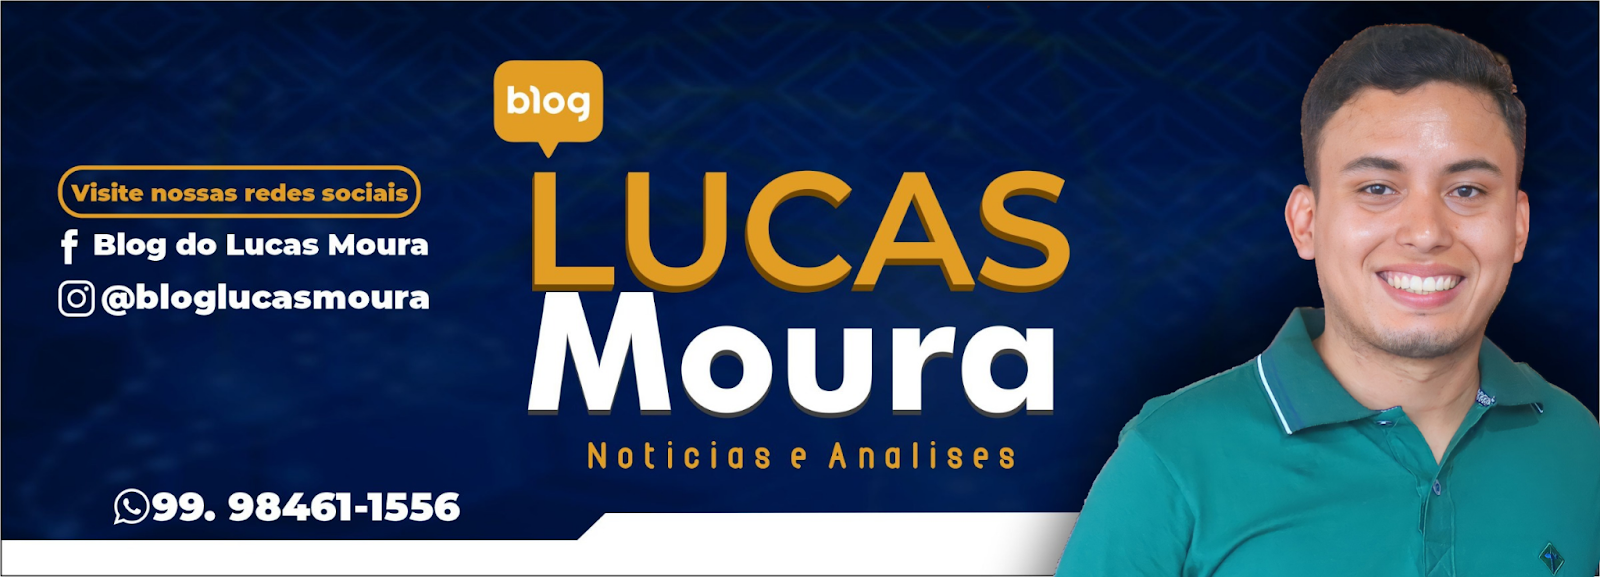 Blog Lucas Moura 